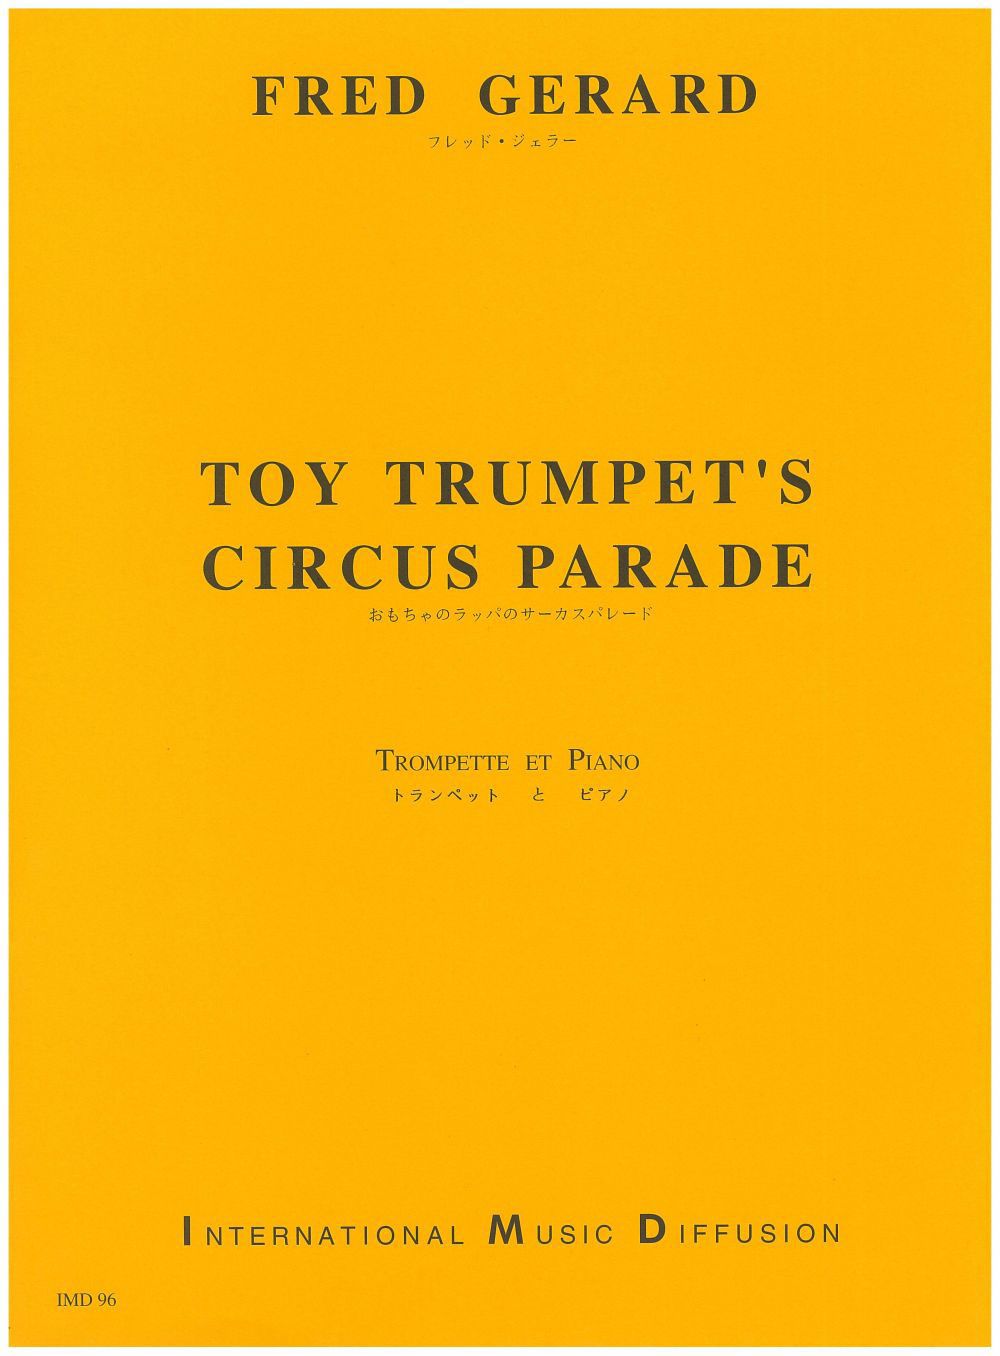 IMD ARPEGES FRED GERARD - TOY TRUMPET'S CIRCUS PARADE - TROMPETTE ET PIANO 